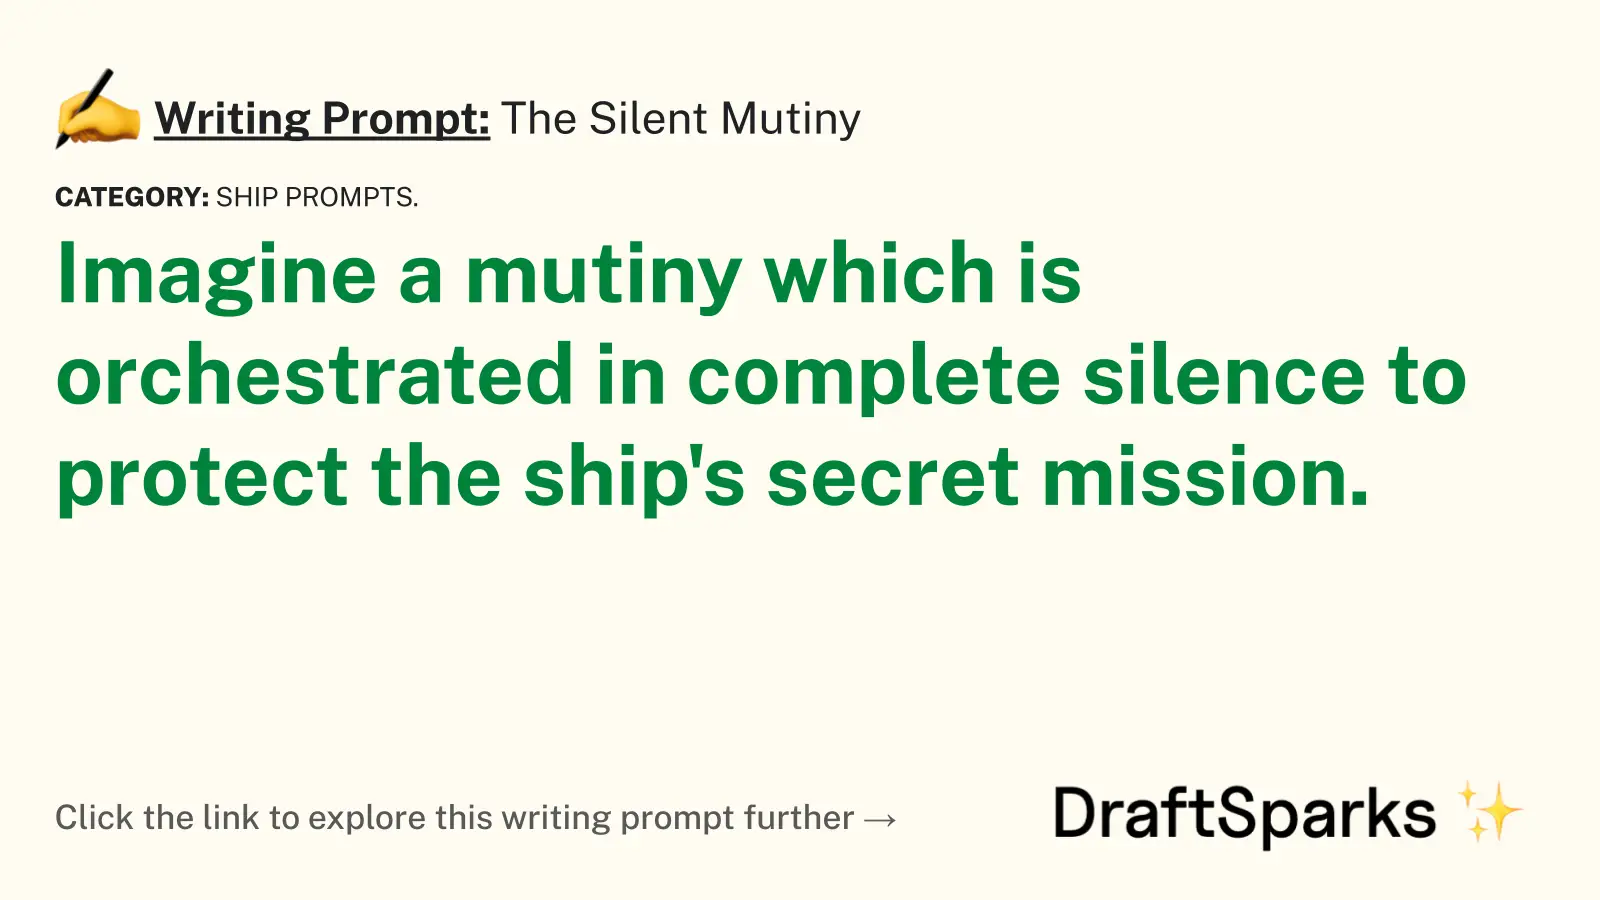 The Silent Mutiny